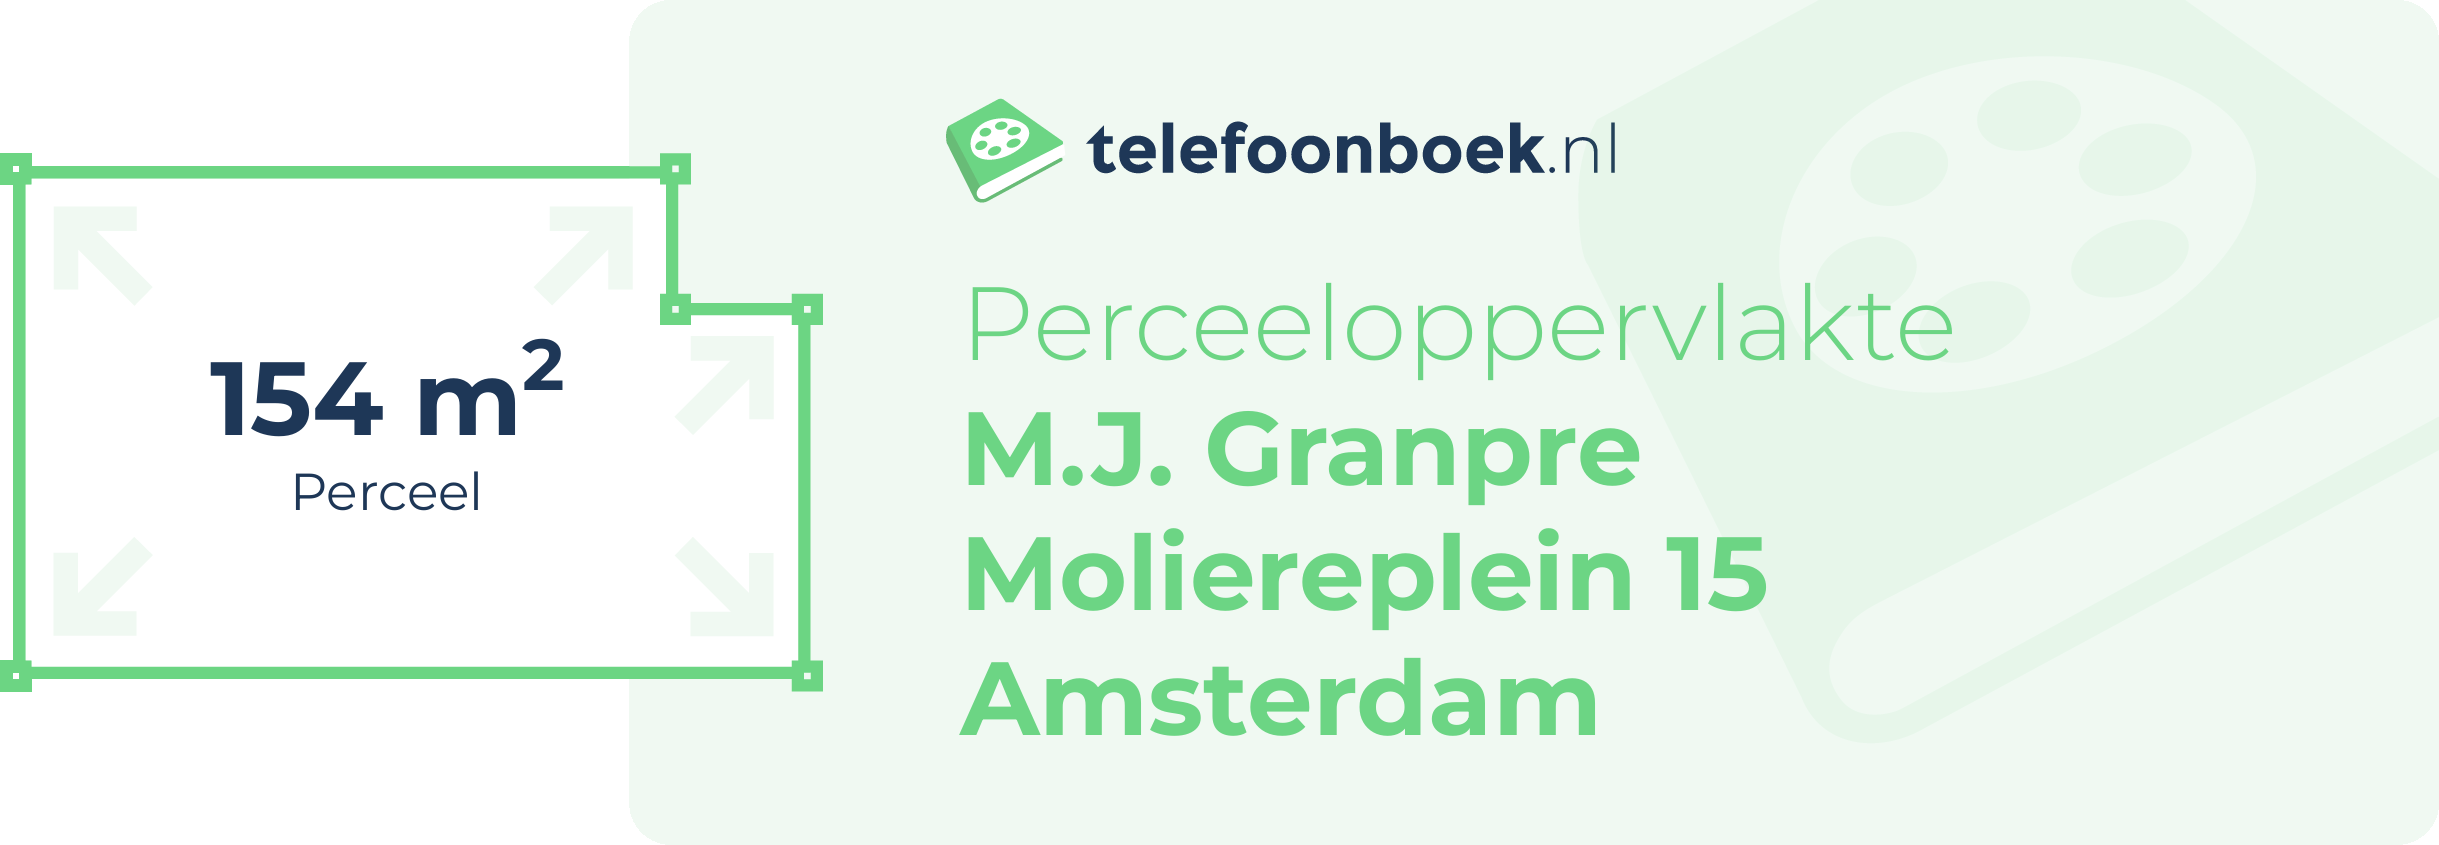 Perceeloppervlakte M.J. Granpre Moliereplein 15 Amsterdam